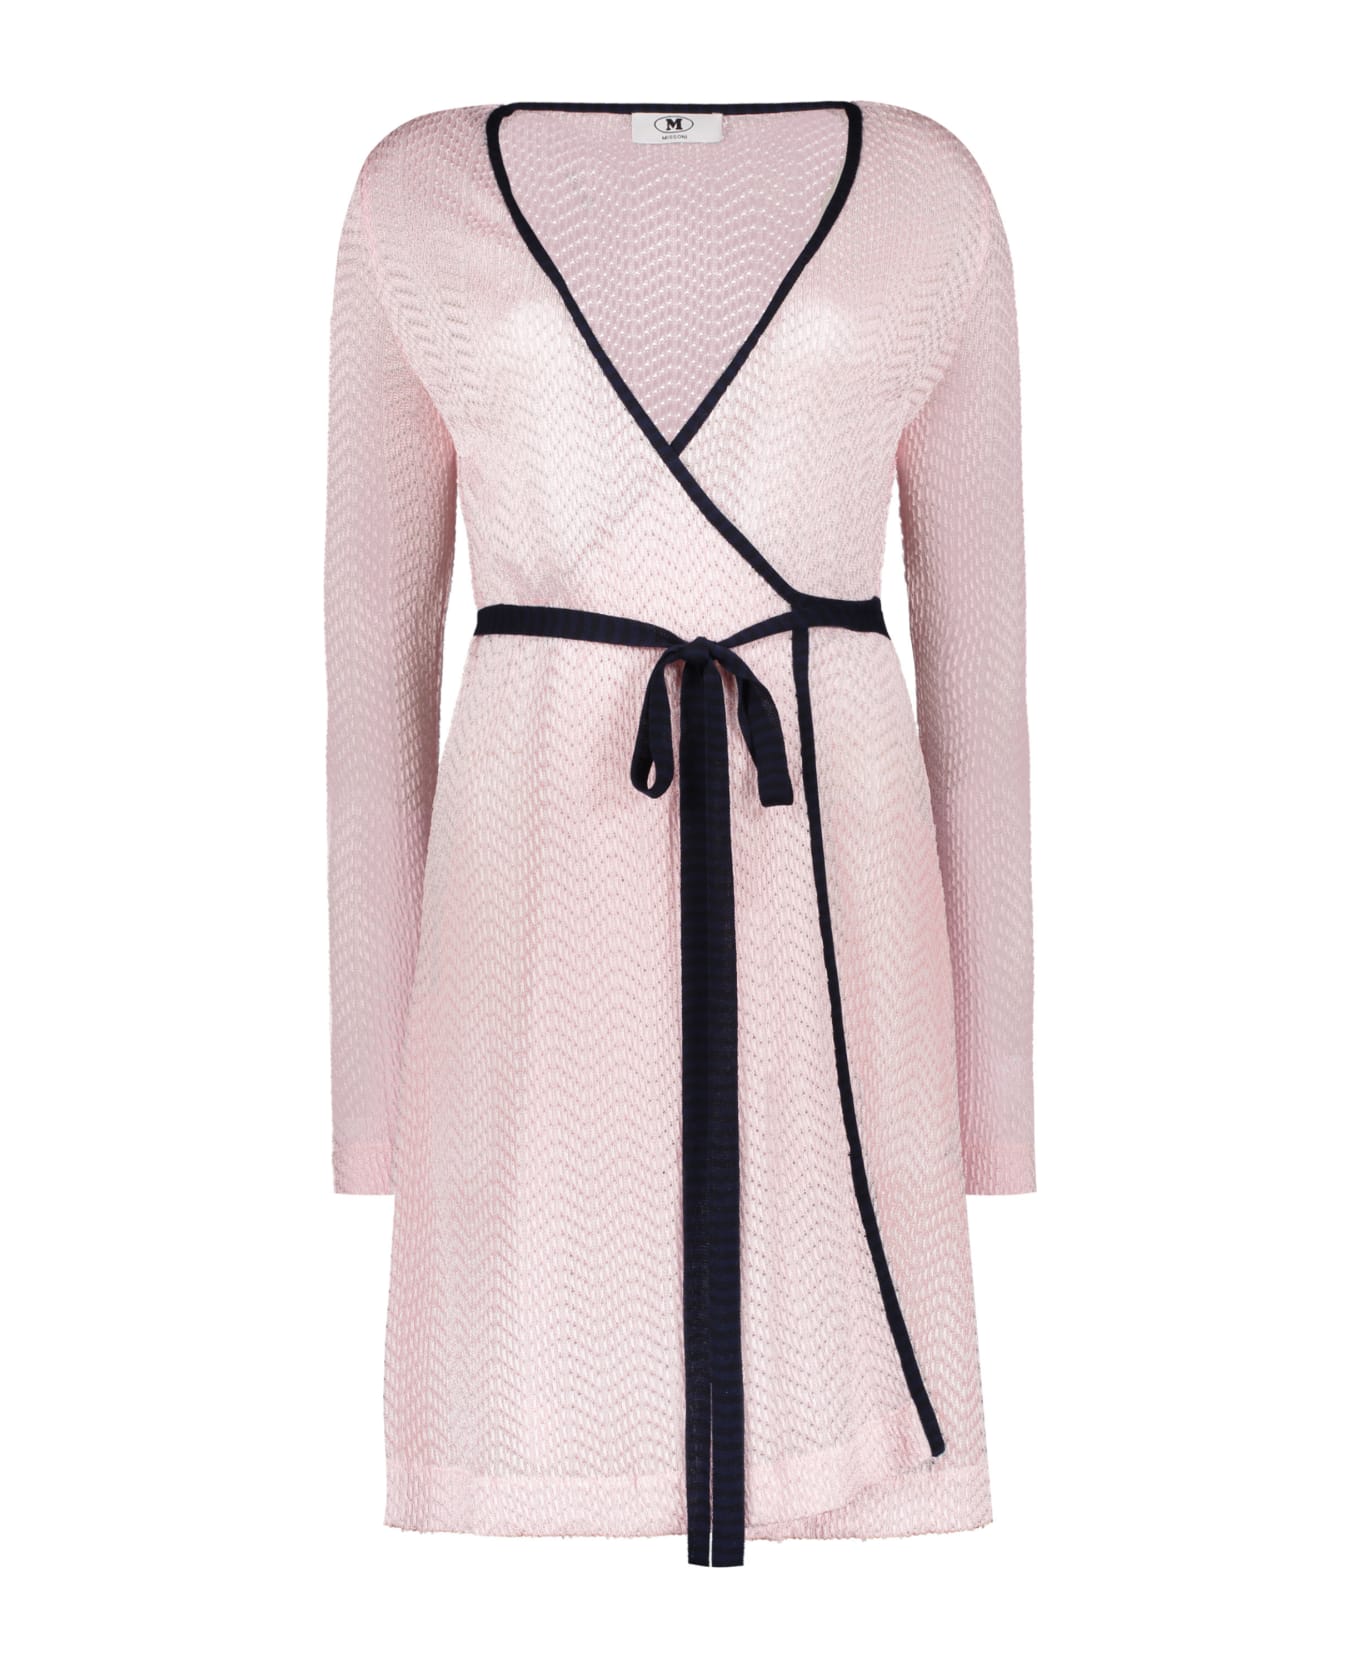 M Missoni Knitted Dress - Pink